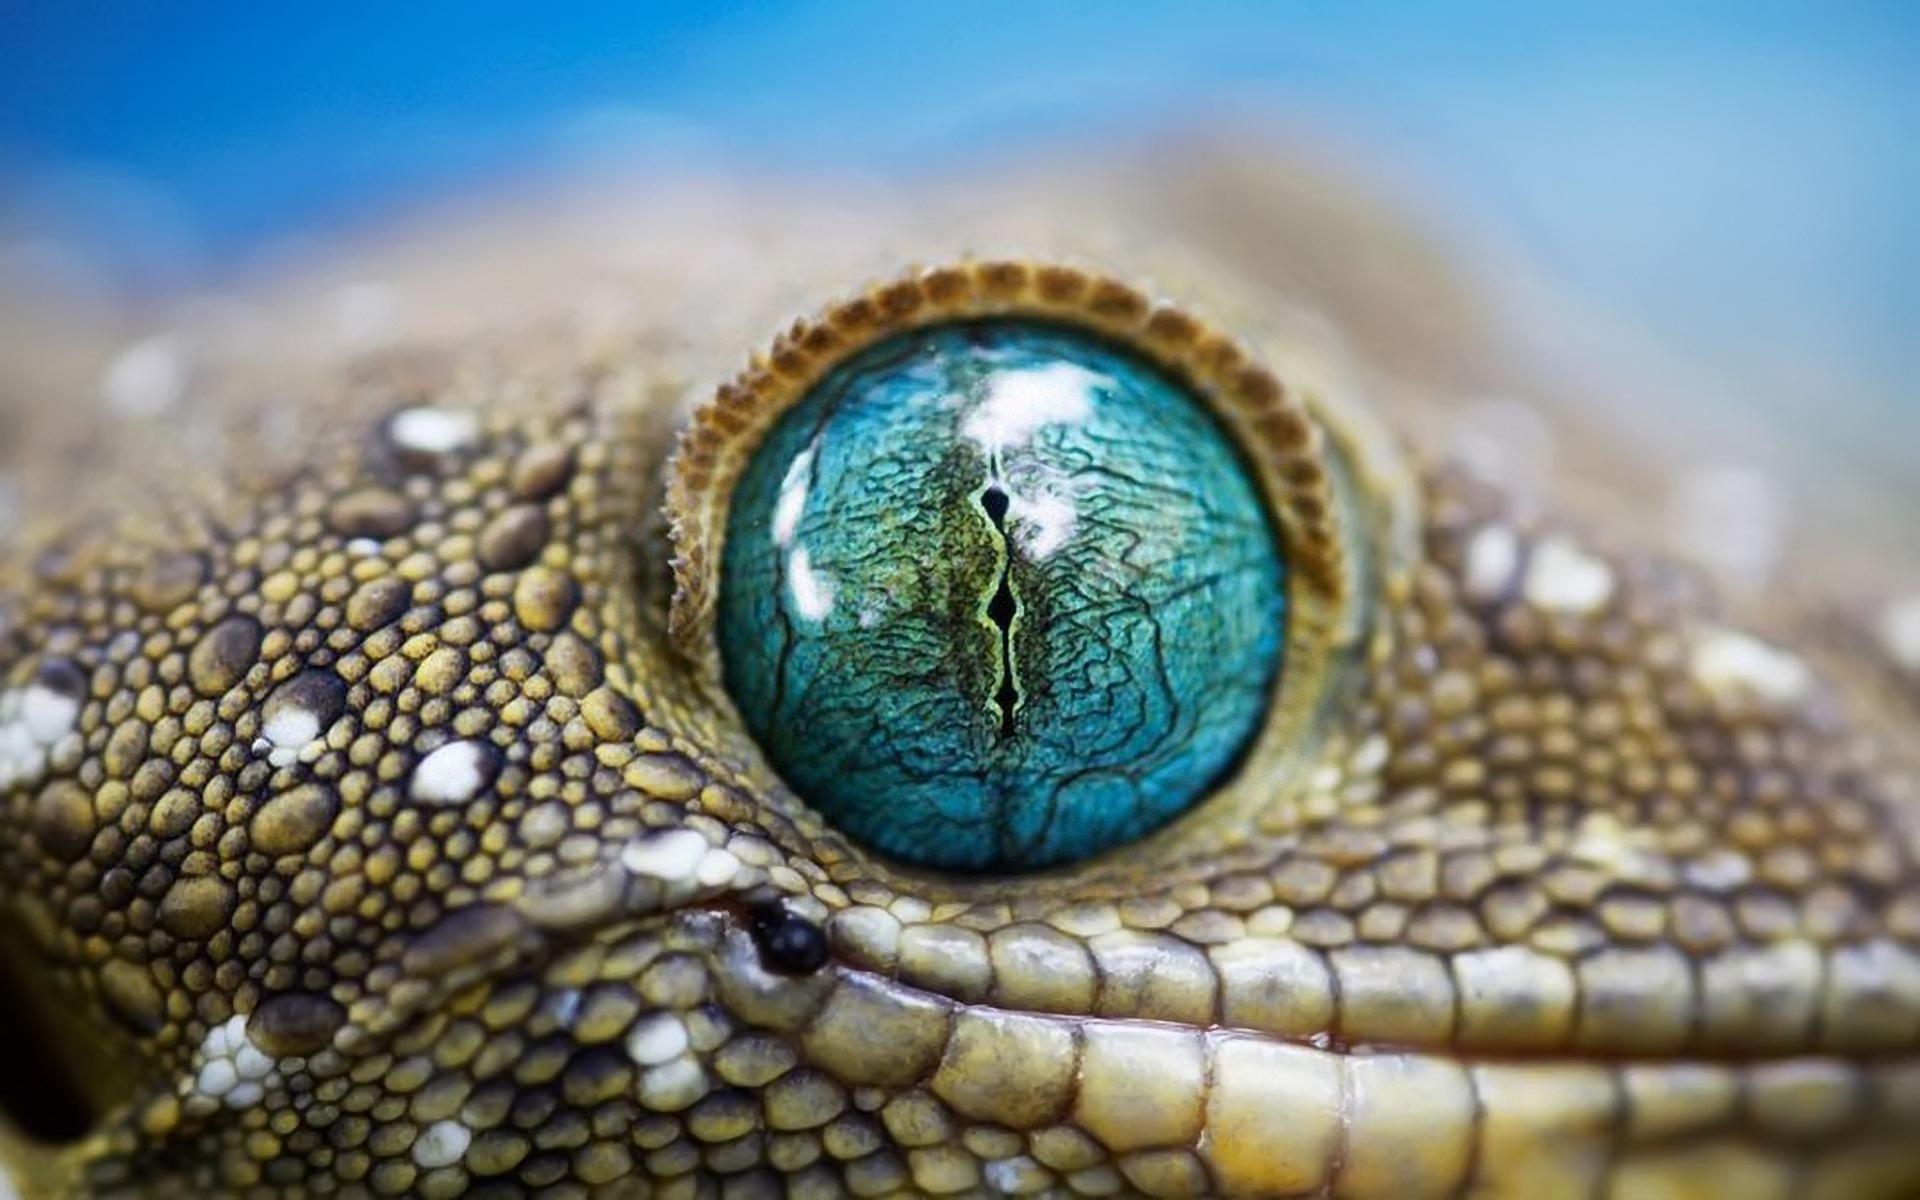 Reptile Eye wallpaper